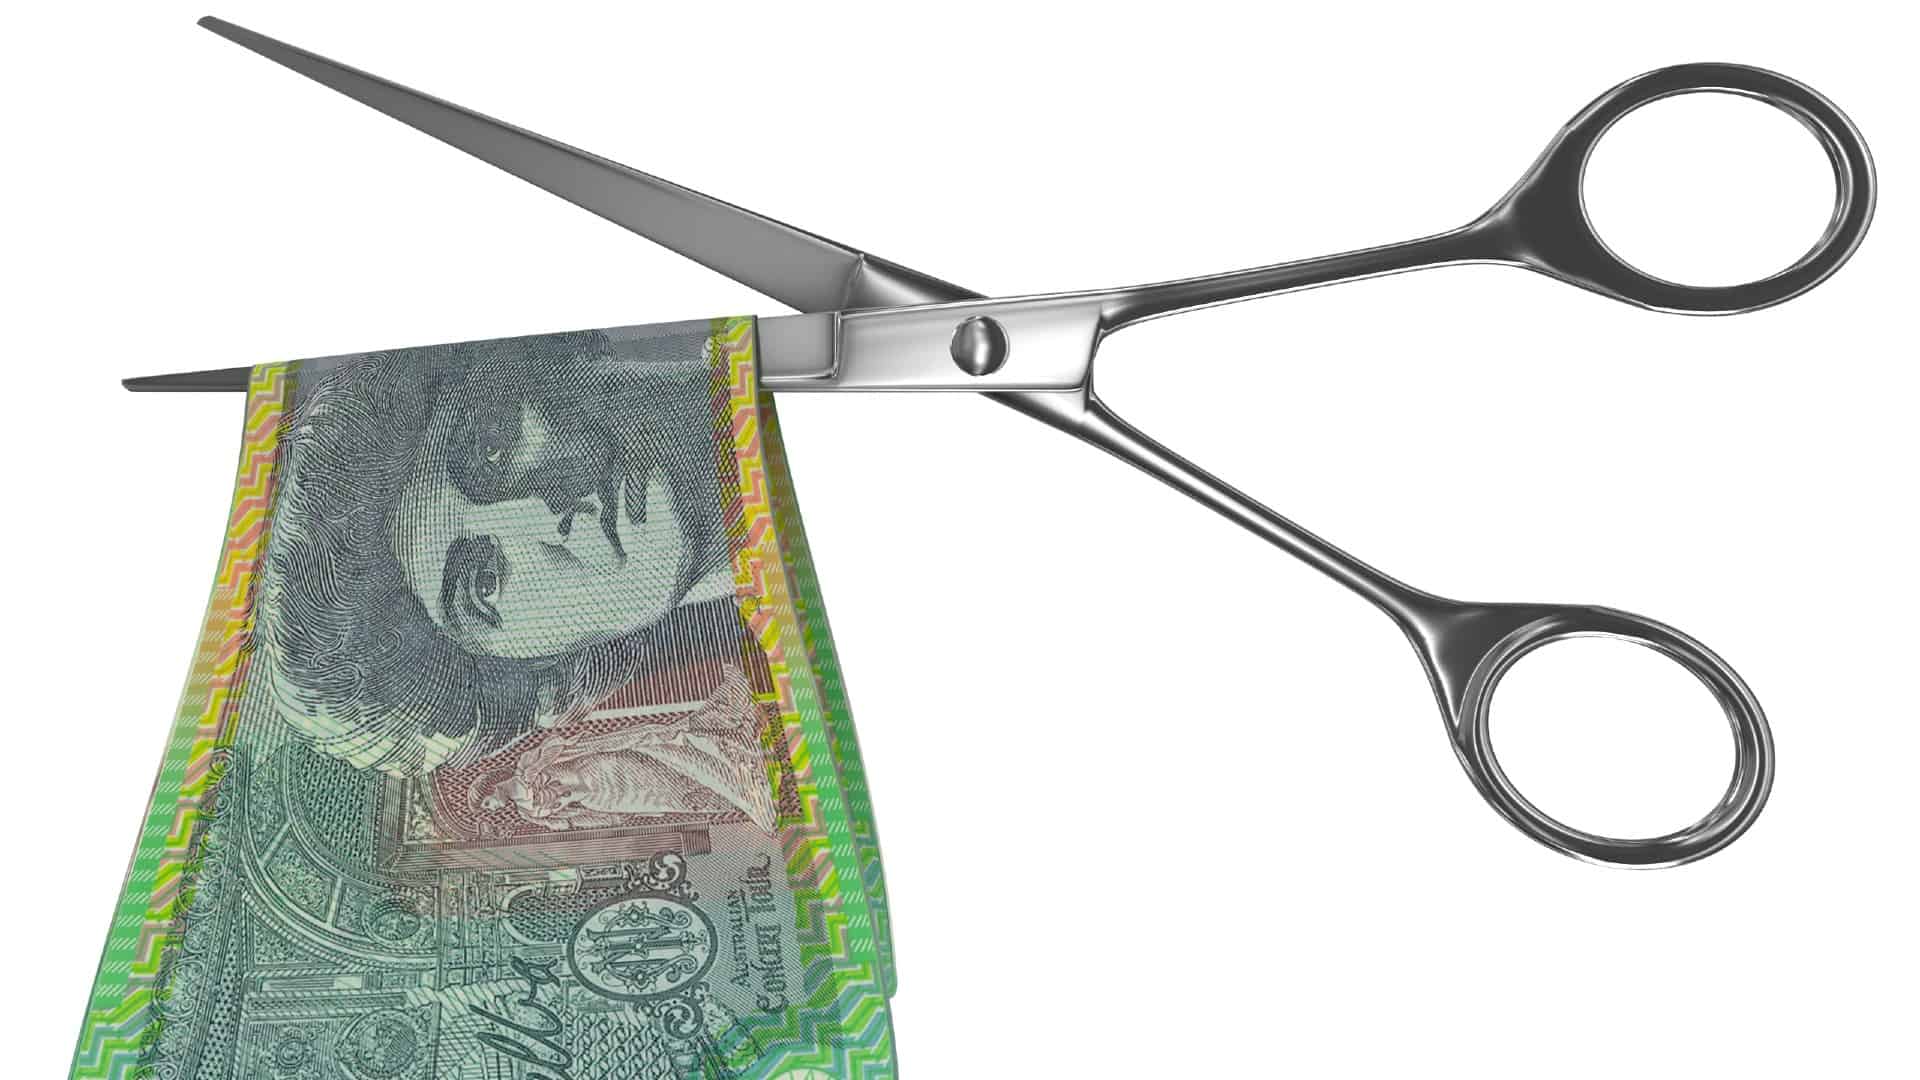 asx share price cut represented by scissors cutting through $100 note